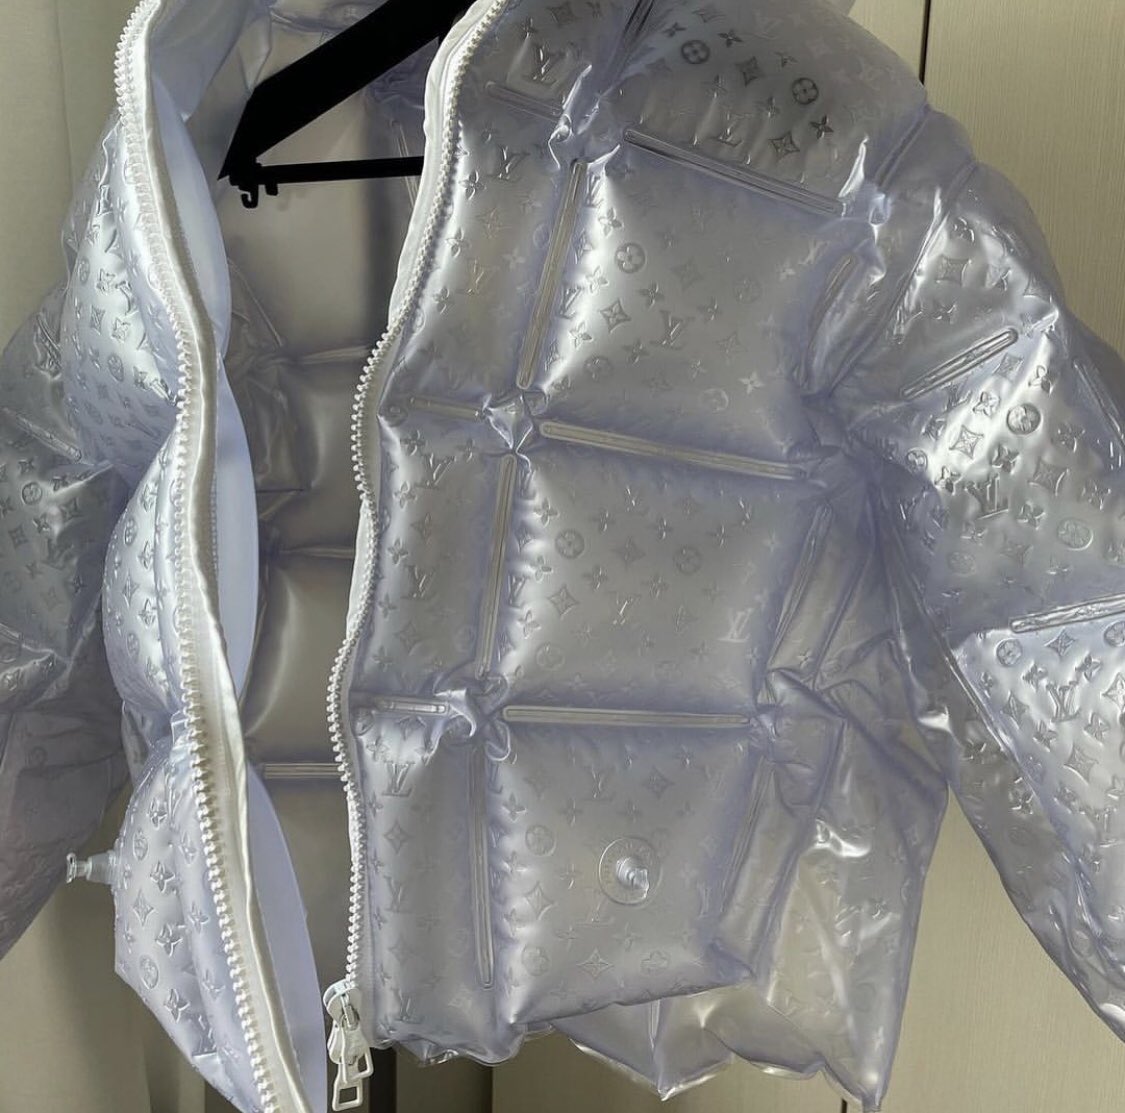 Louis Vuitton Transparent Inflatable Puffer Jacket